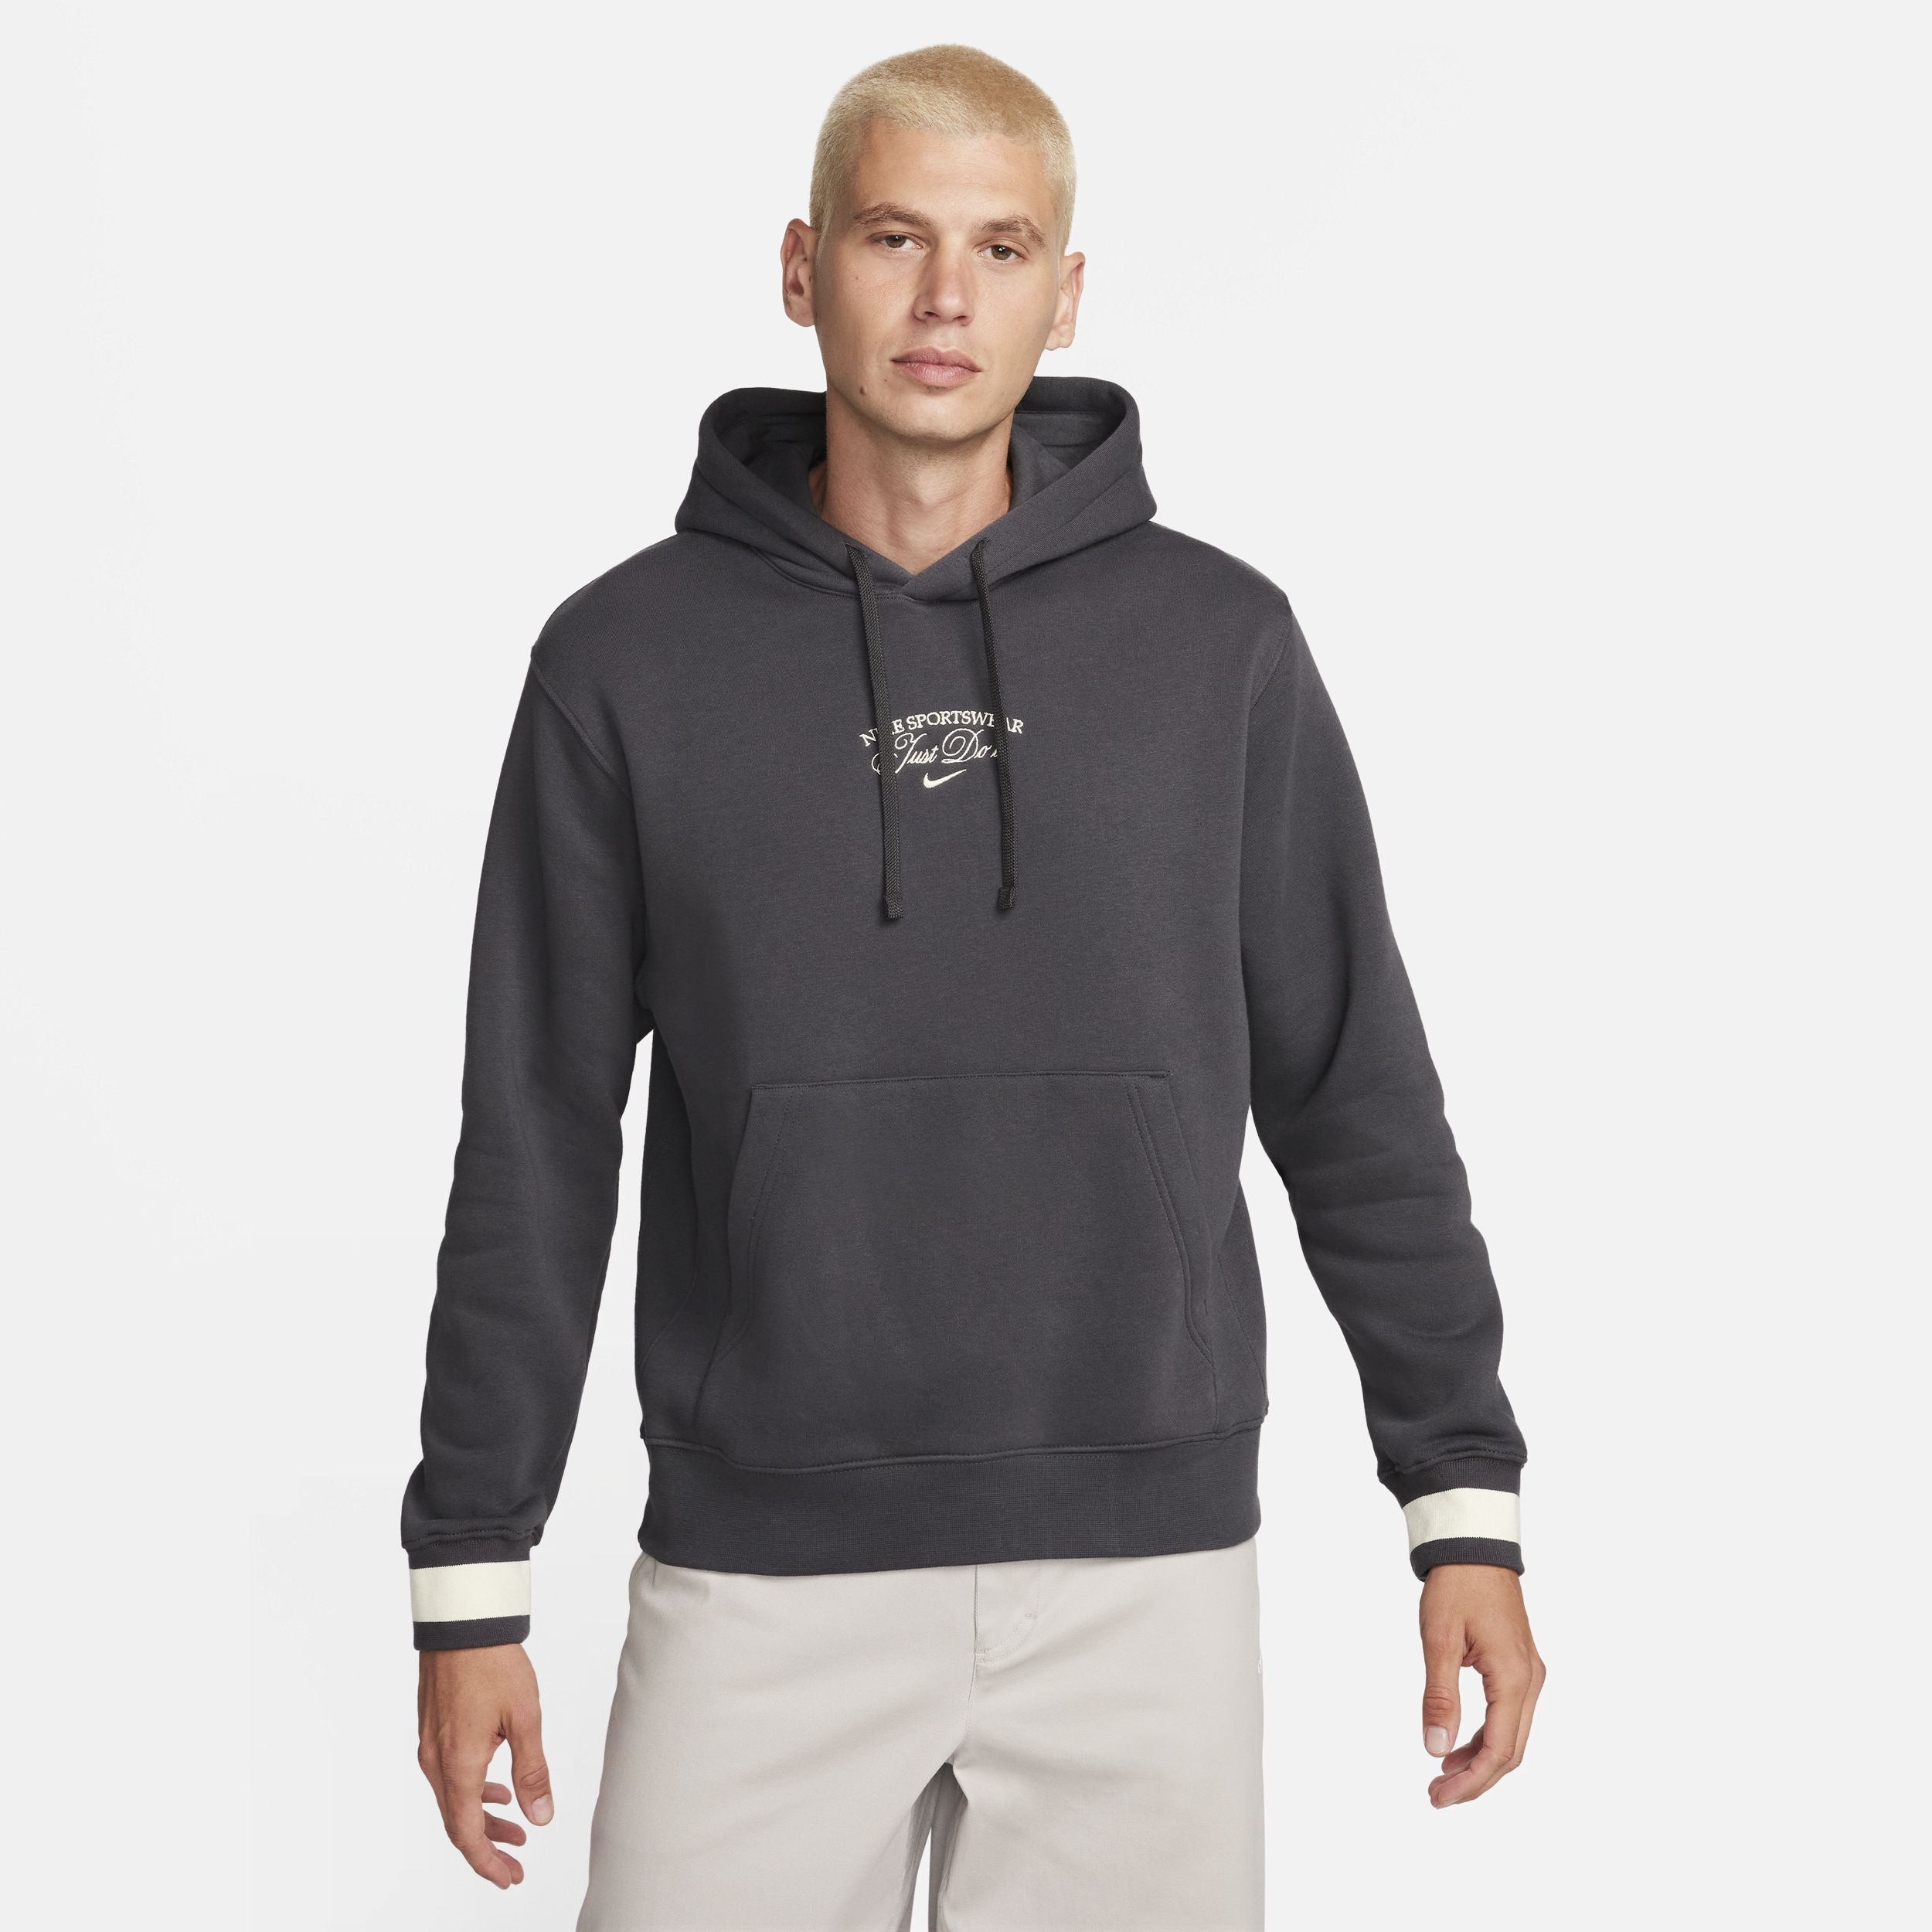 Nike Sportswear-pulloverhættetrøje i fleece til mænd - grå